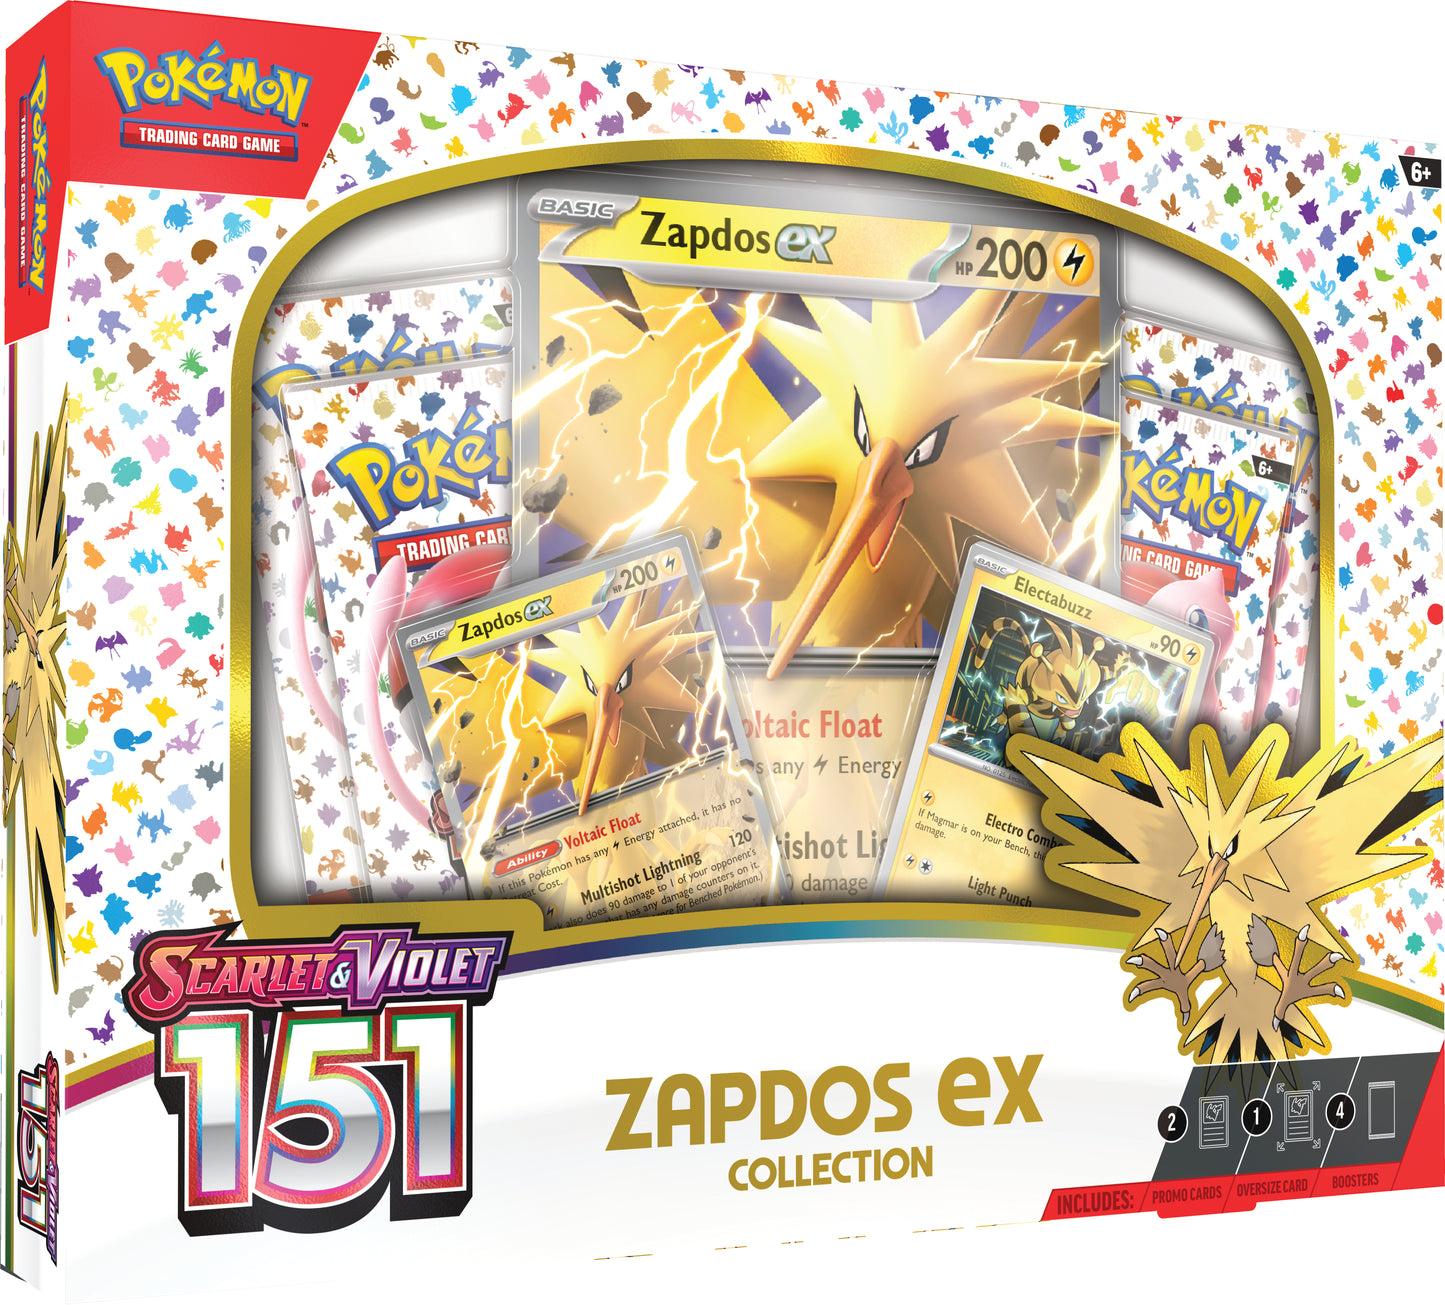 Pokemon TCG - Scarlet & Violet—151 Collection— Zapdos ex